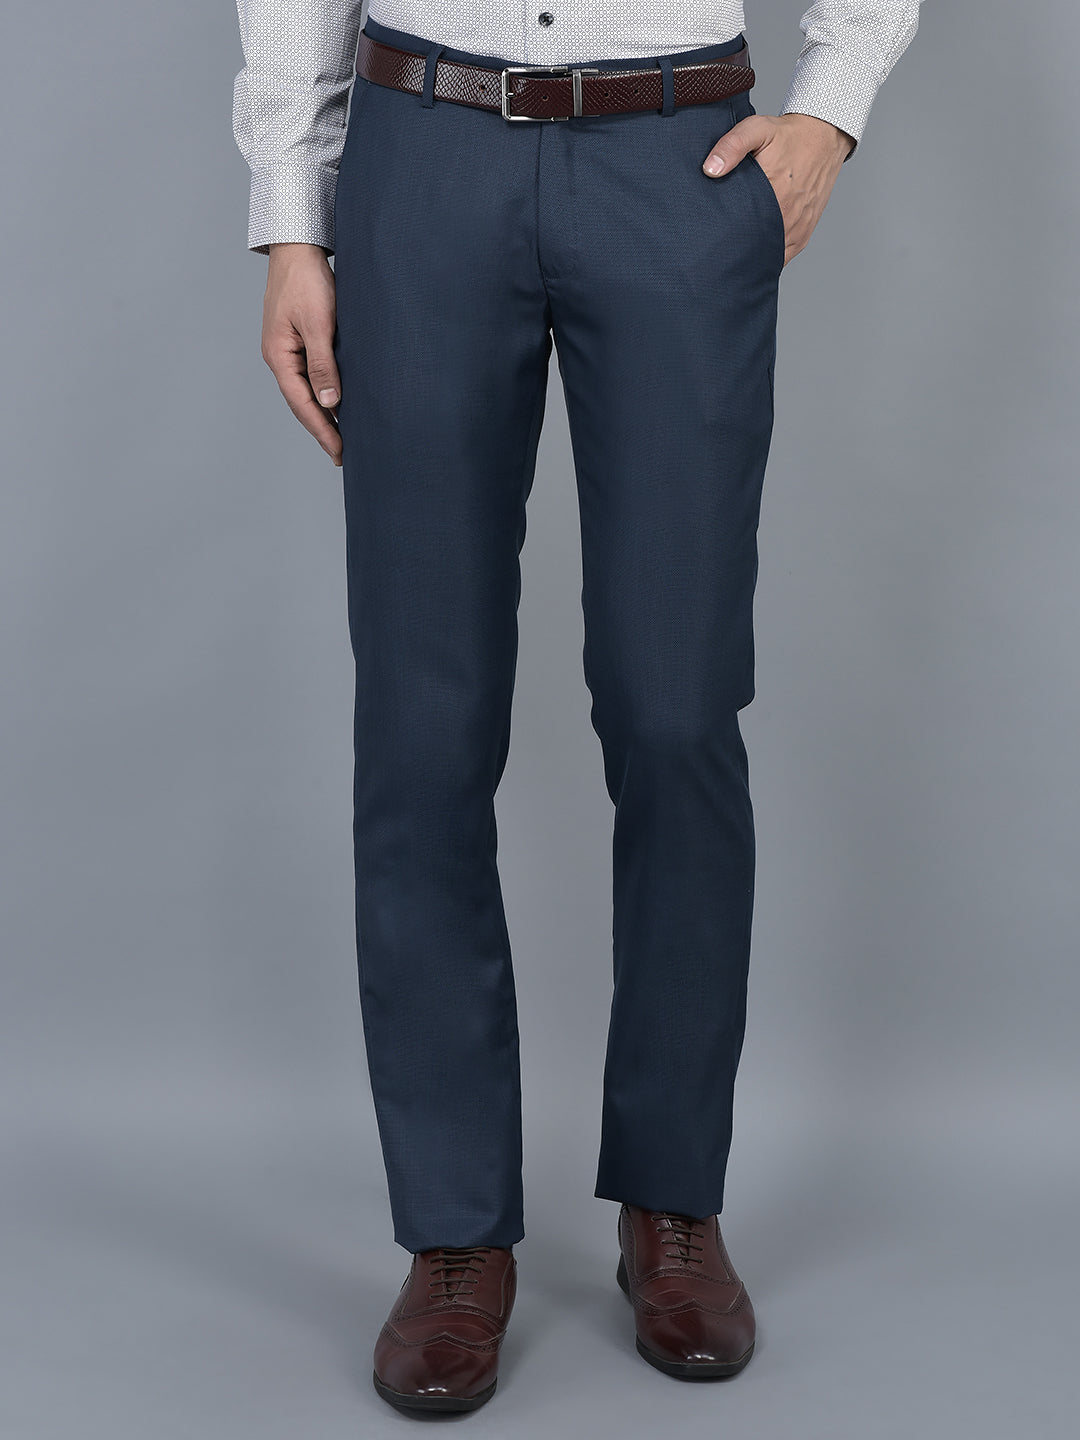 MANCREW Formal Pants for men  Formal Trousers Combo  Cream Navy Blue